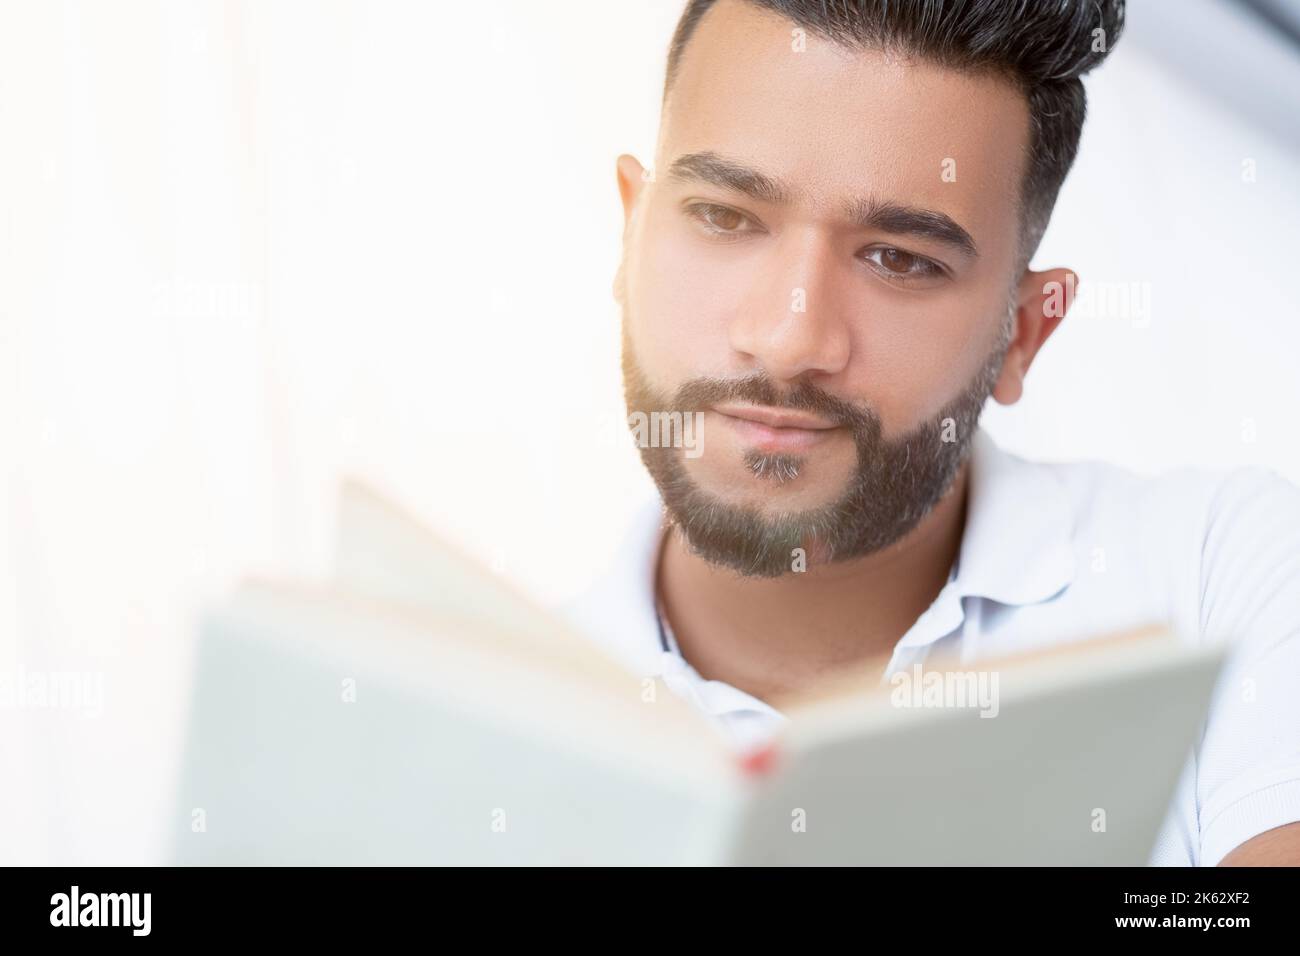 interesting book involved man enjoying time Stock Photo